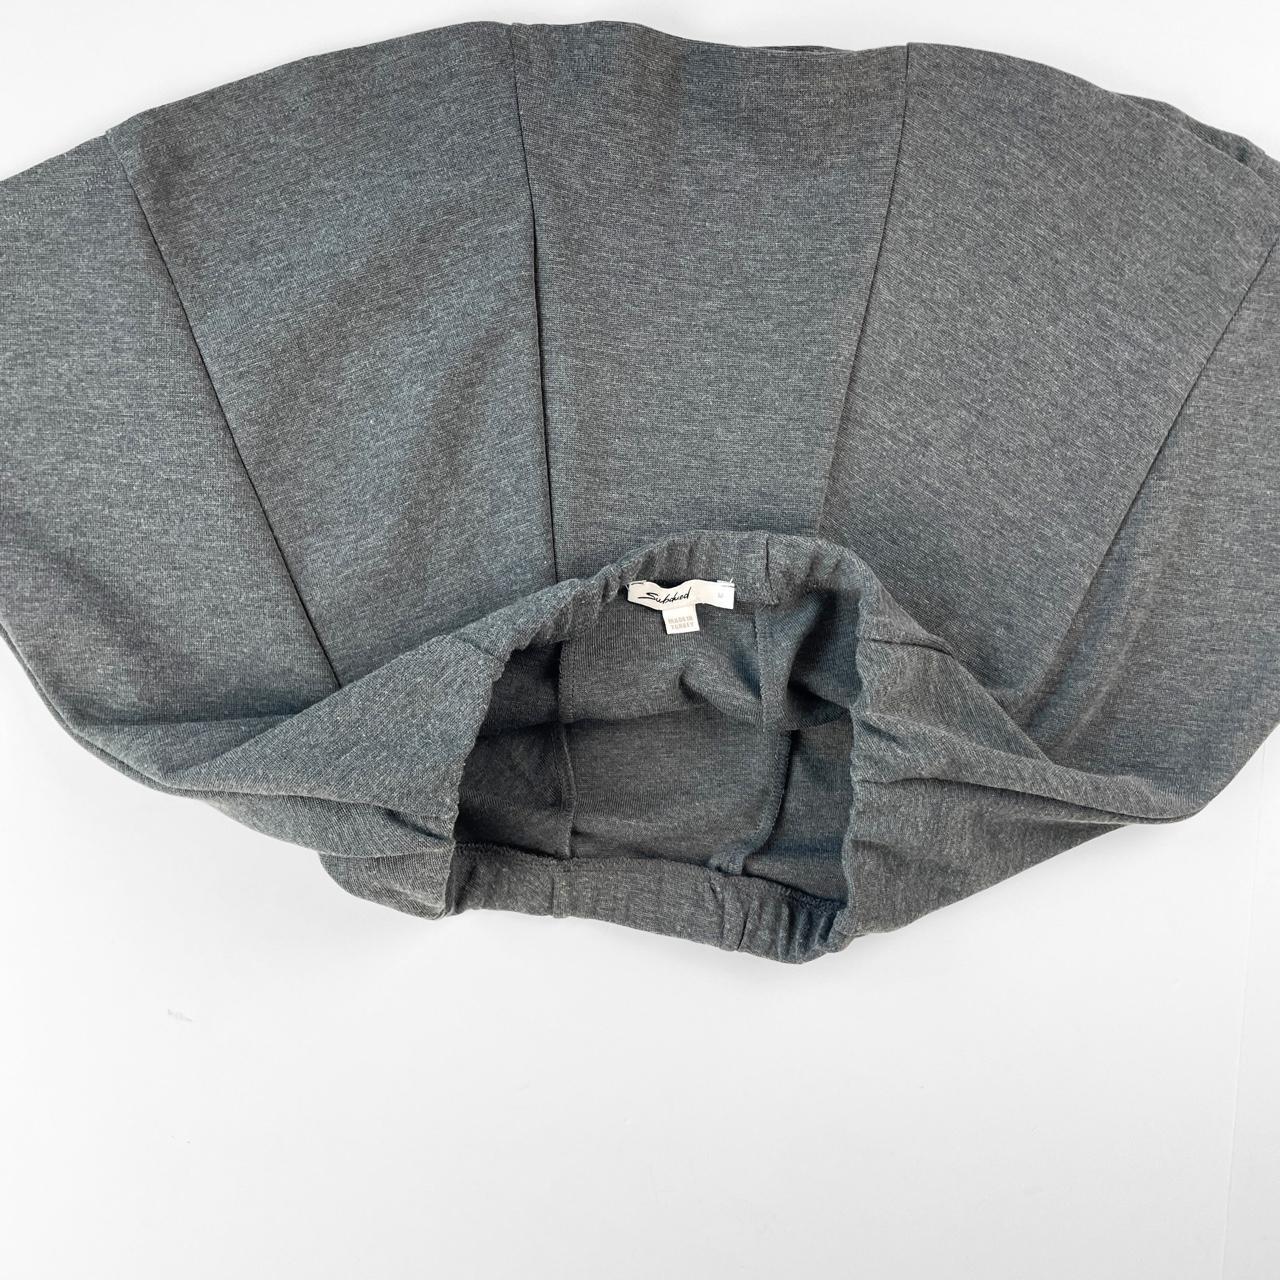 Product Image 3 - Pleated Mini Skirt

Cutest little grey